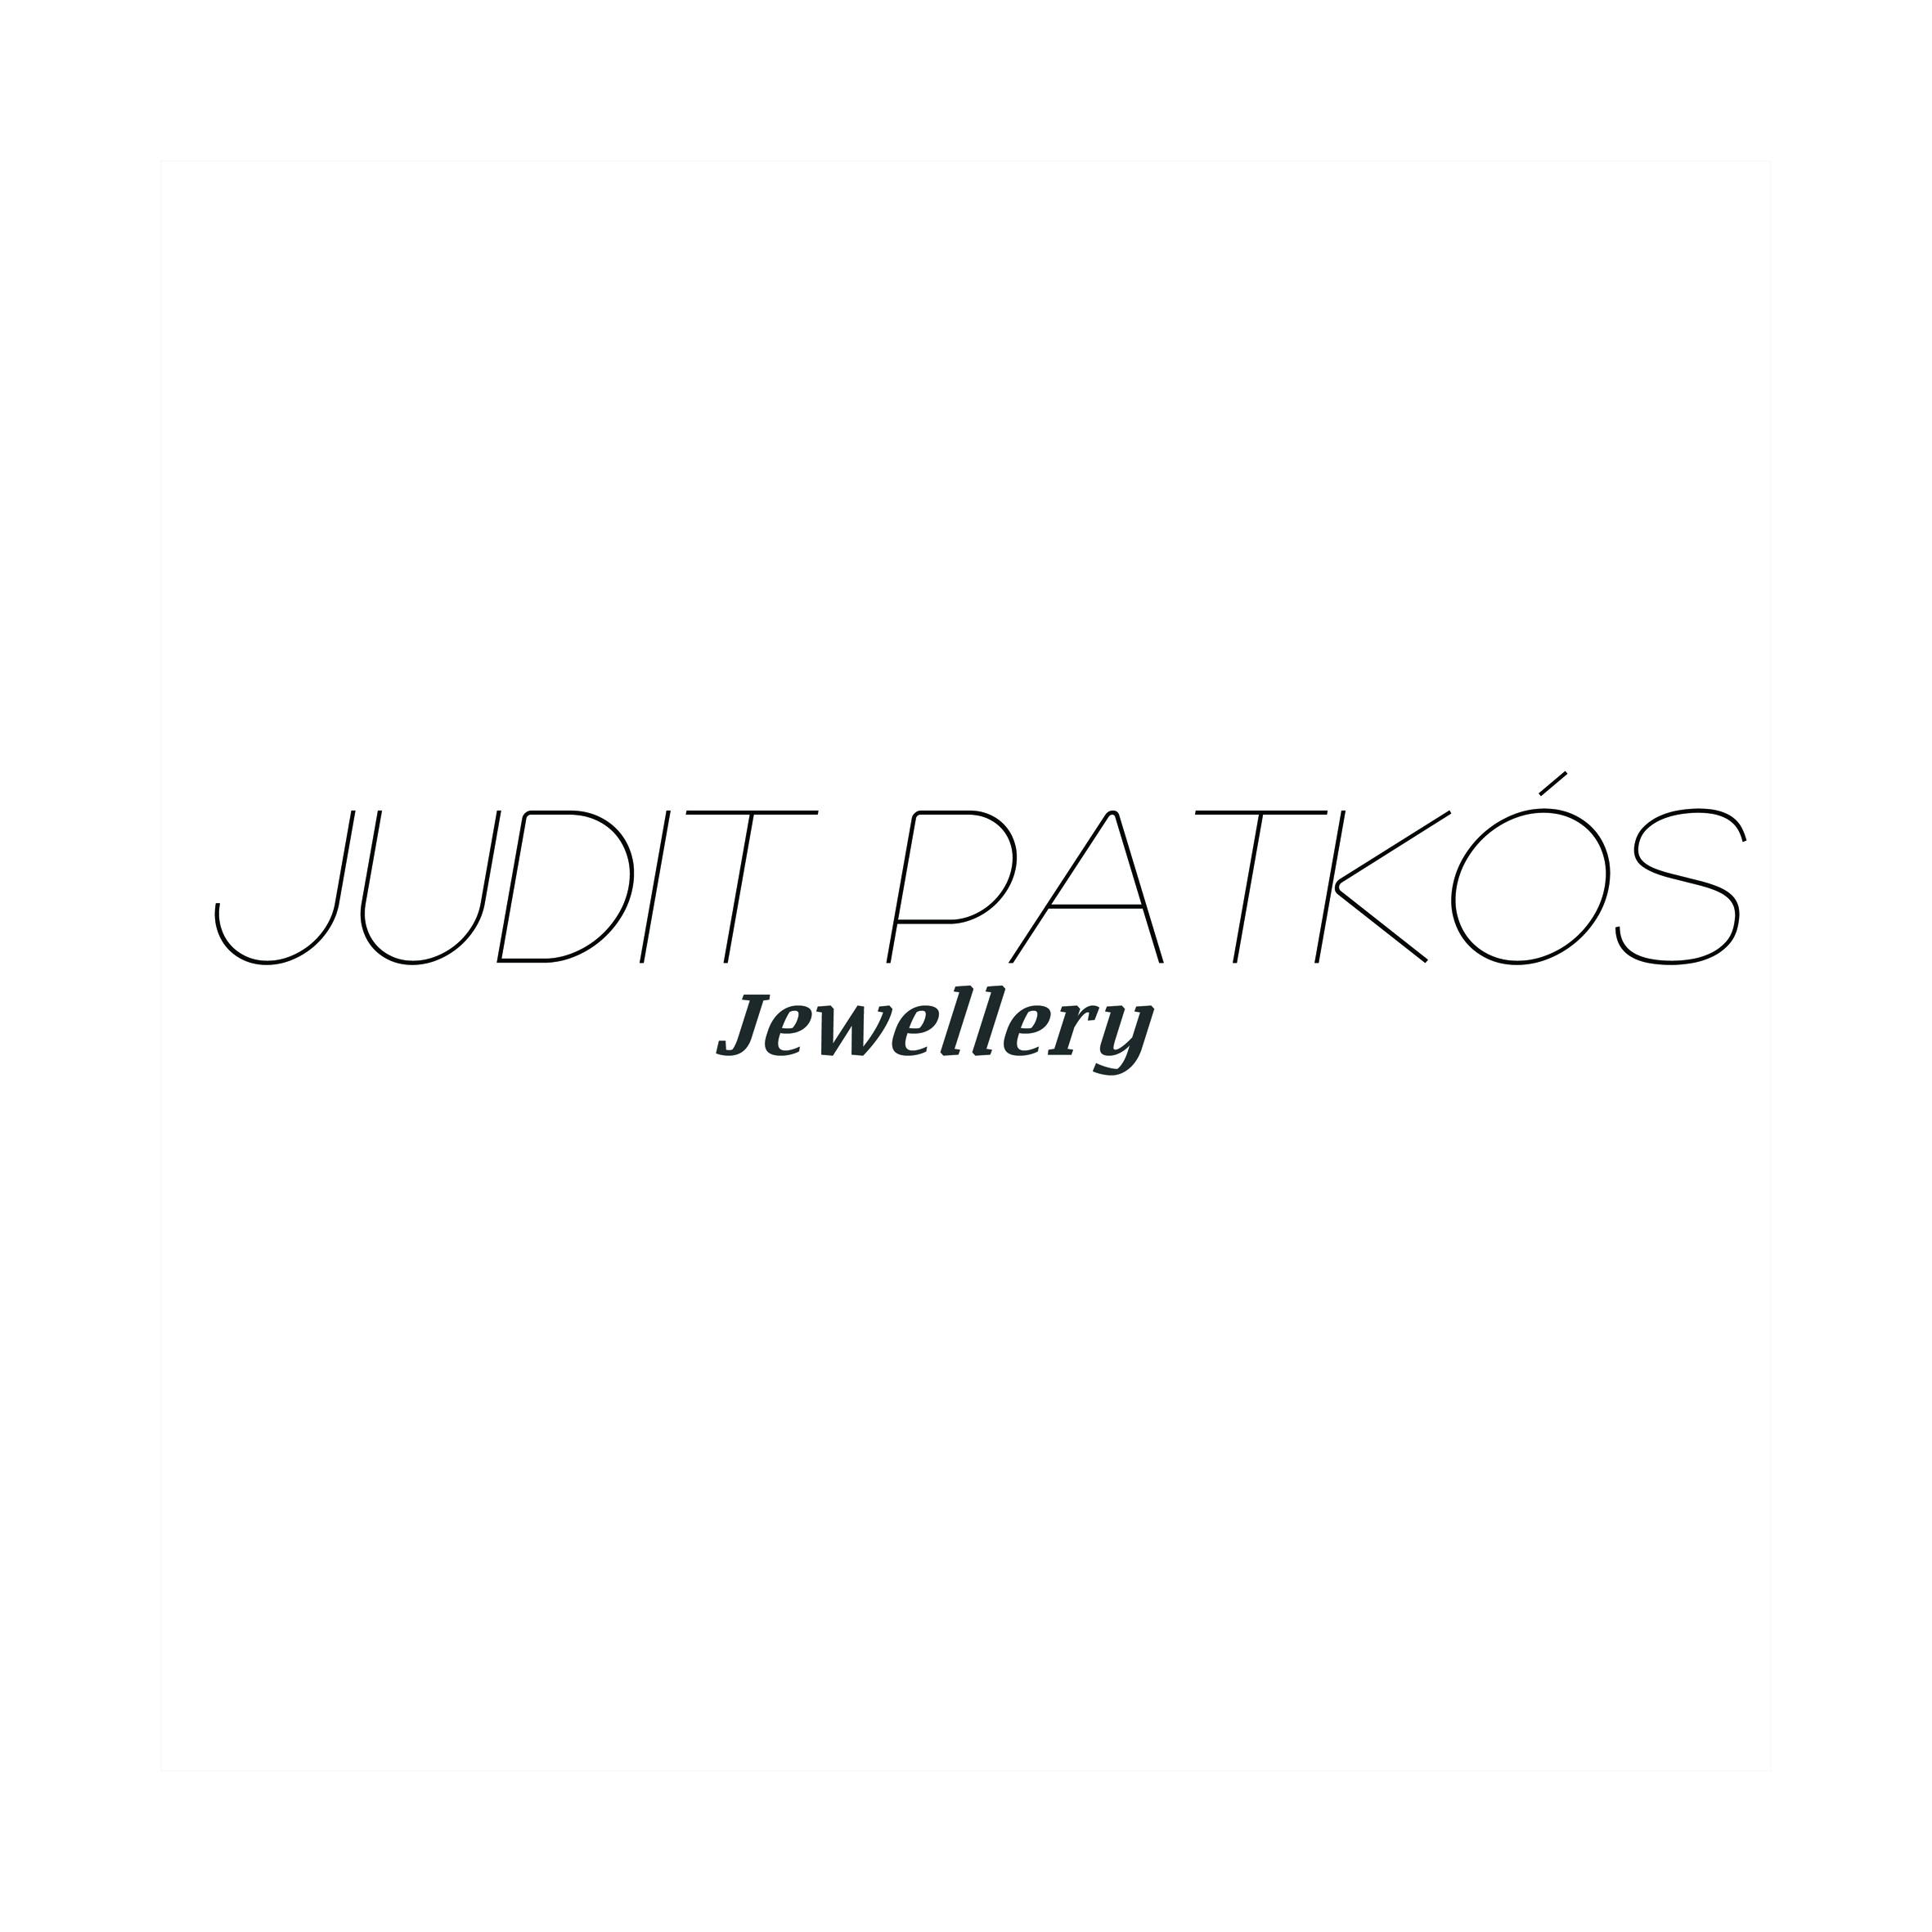 Judit Patkos Jewellery